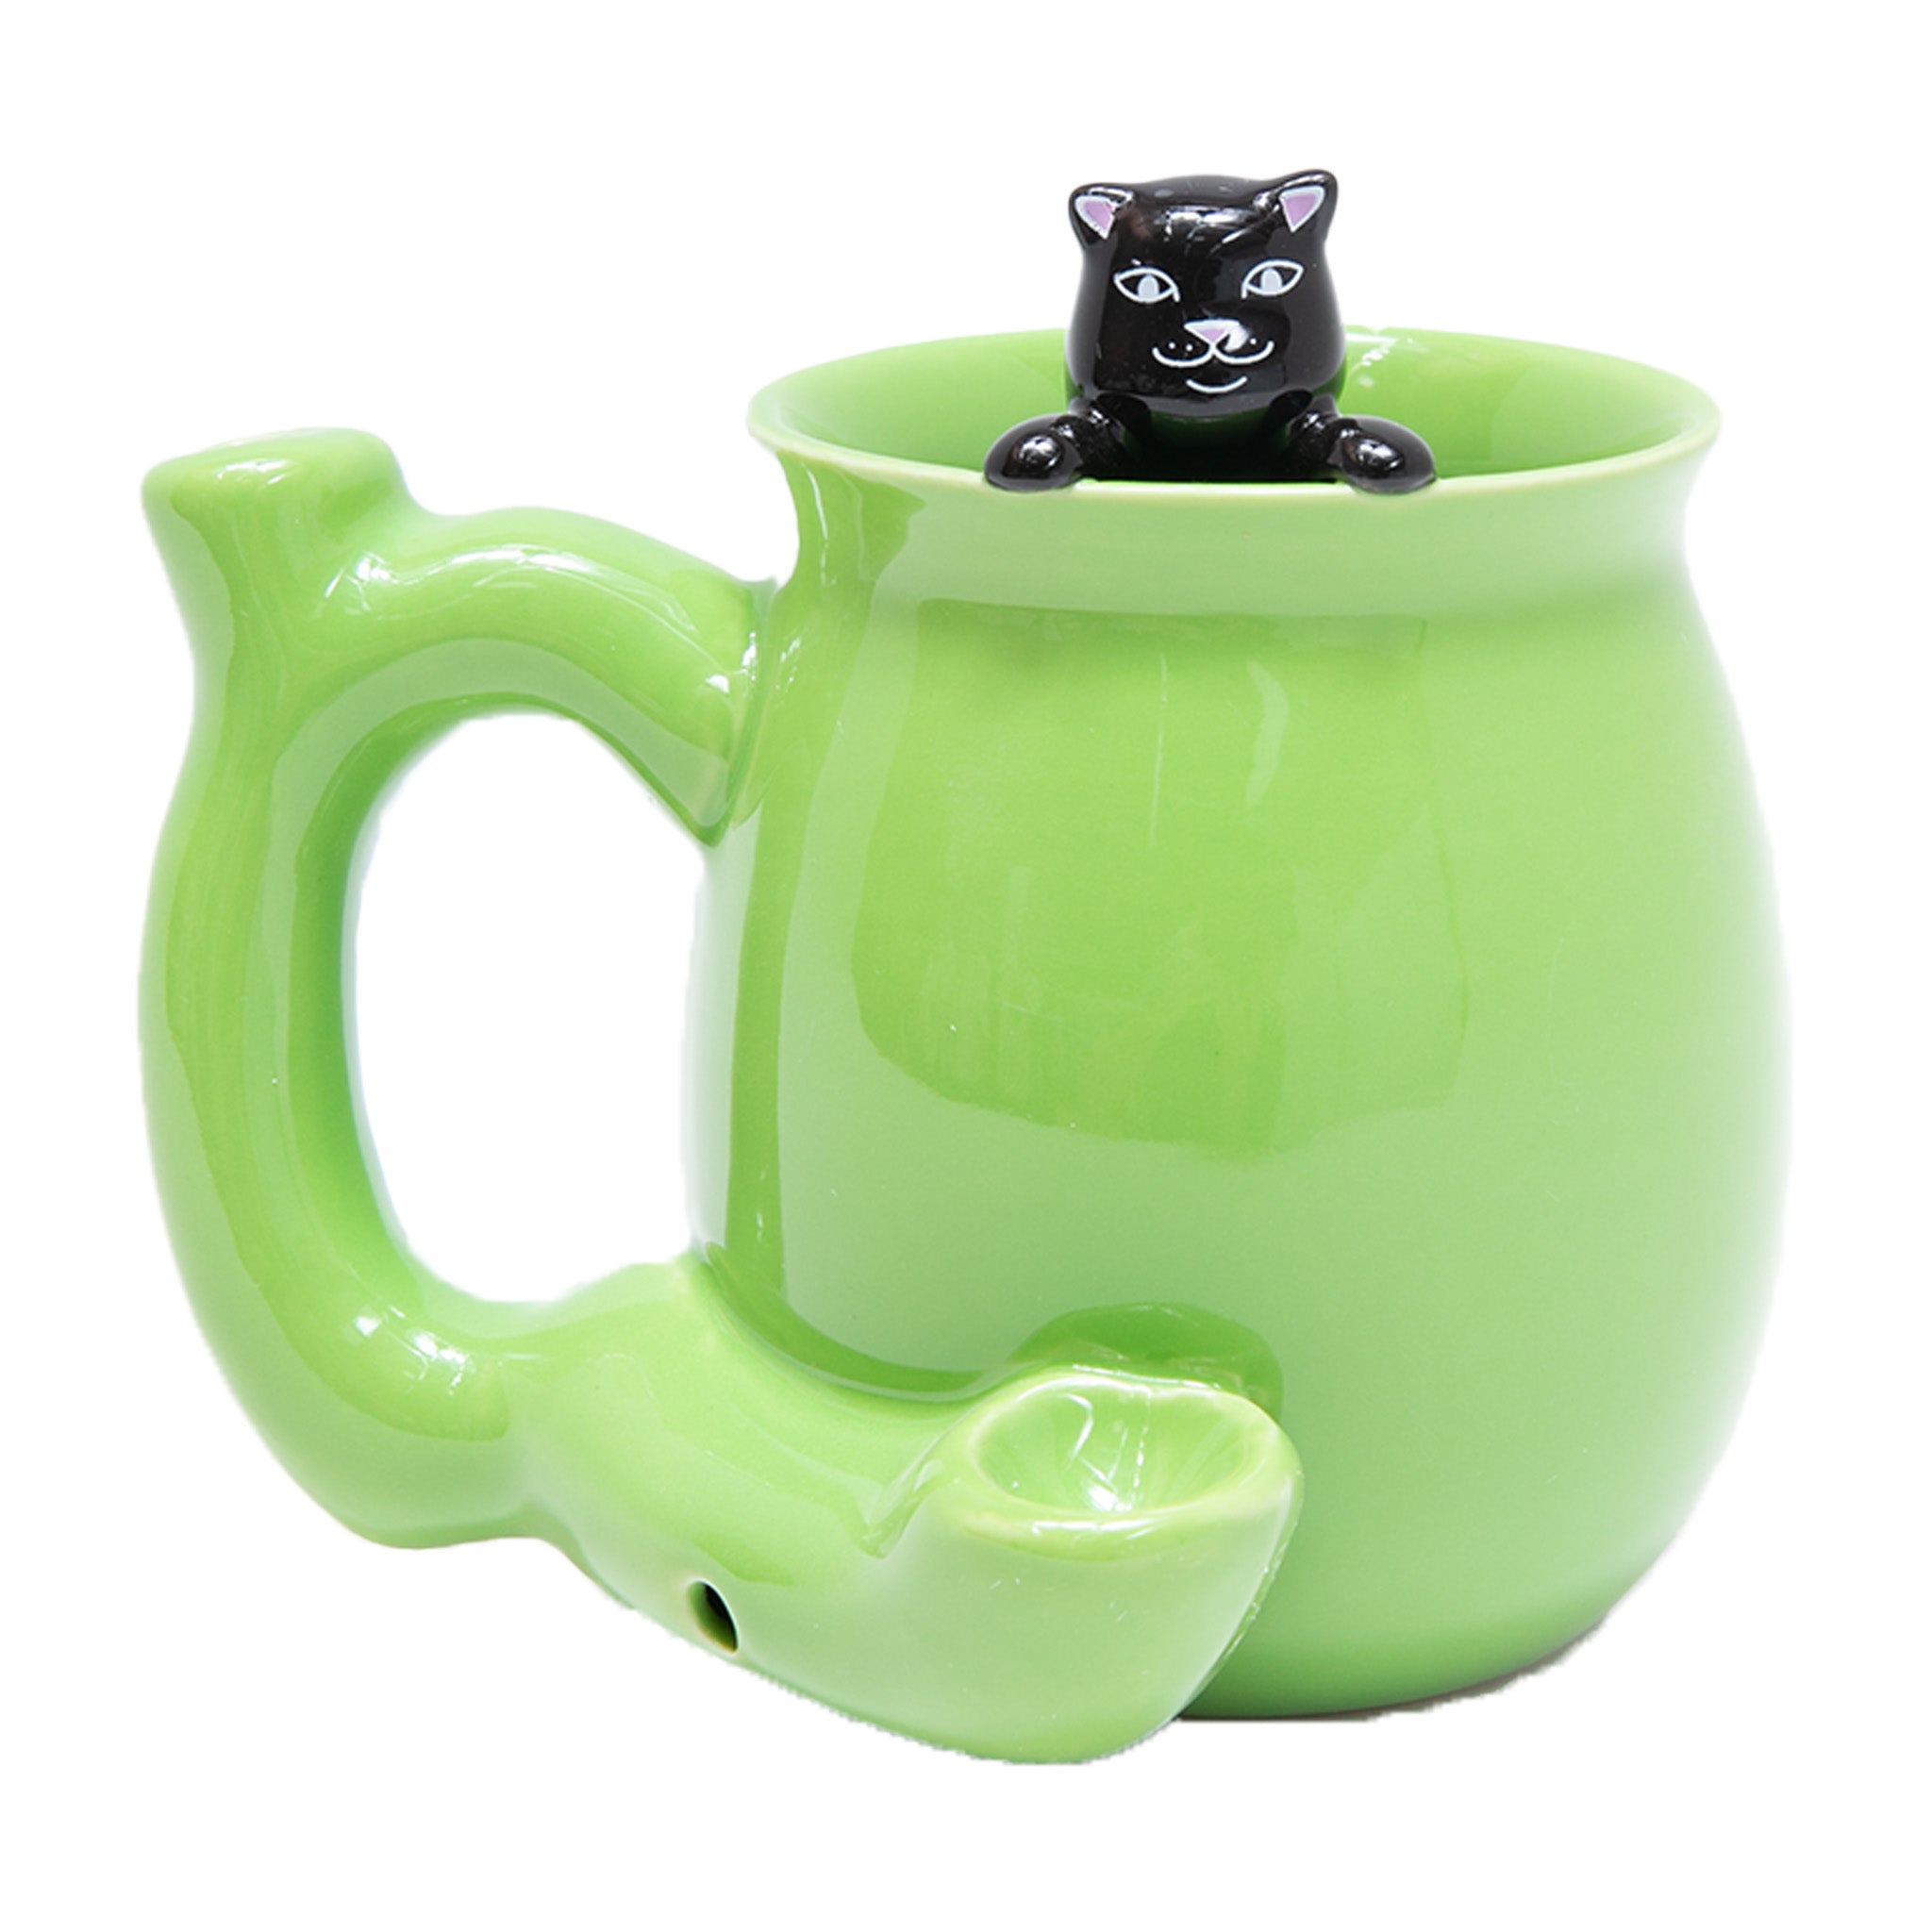 RipNDip Jermal Wake / Bake Mug (Green)